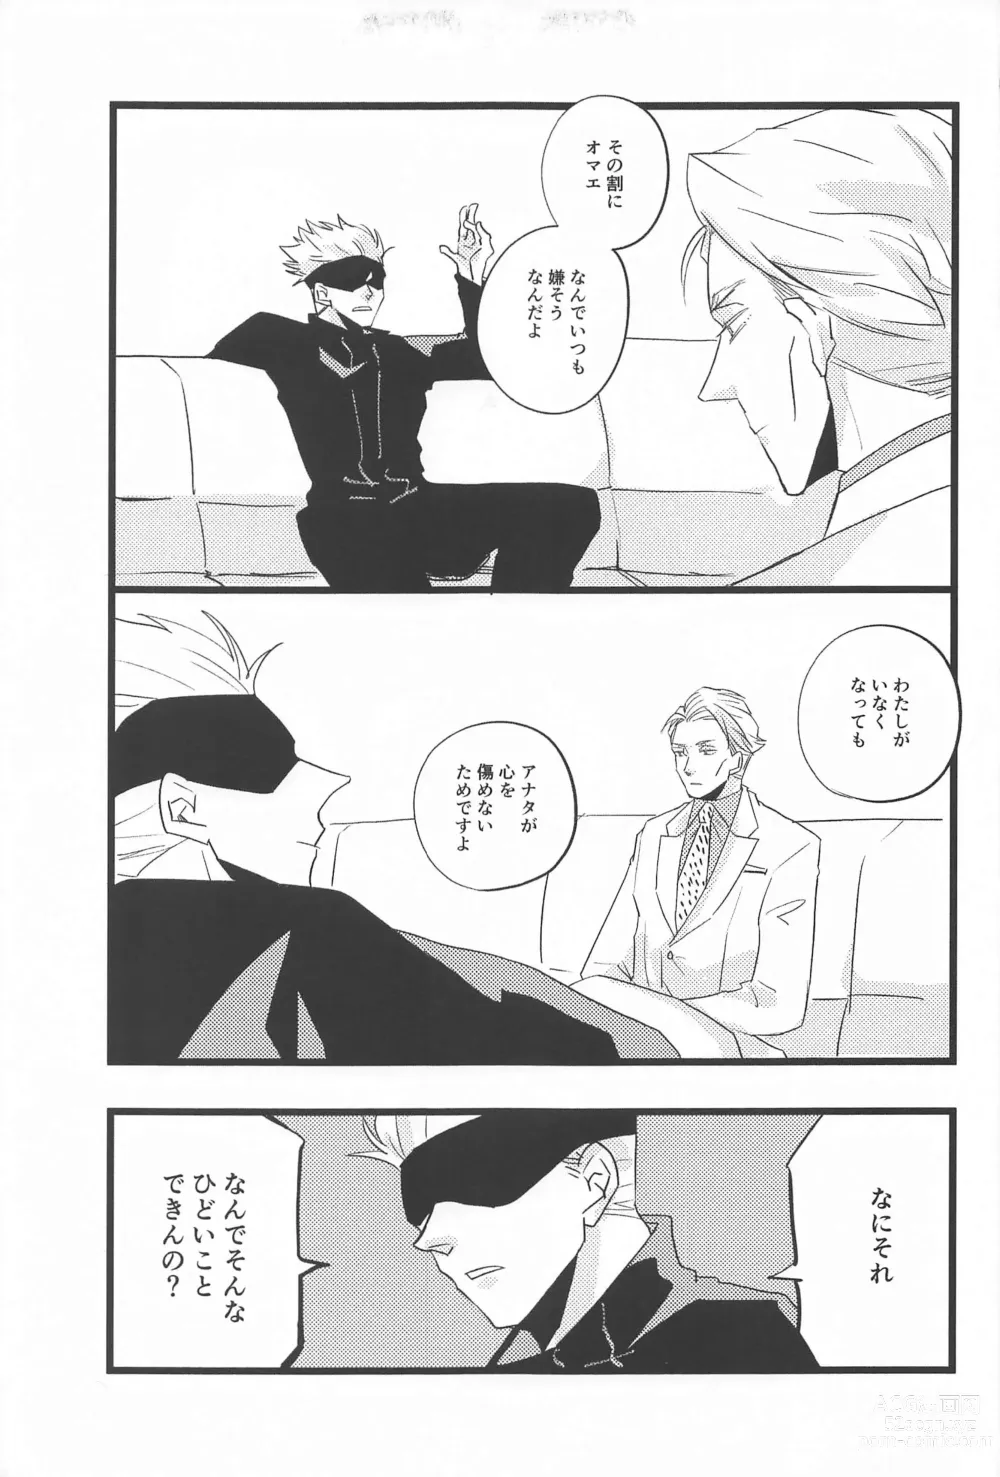 Page 40 of doujinshi timeless memory 2